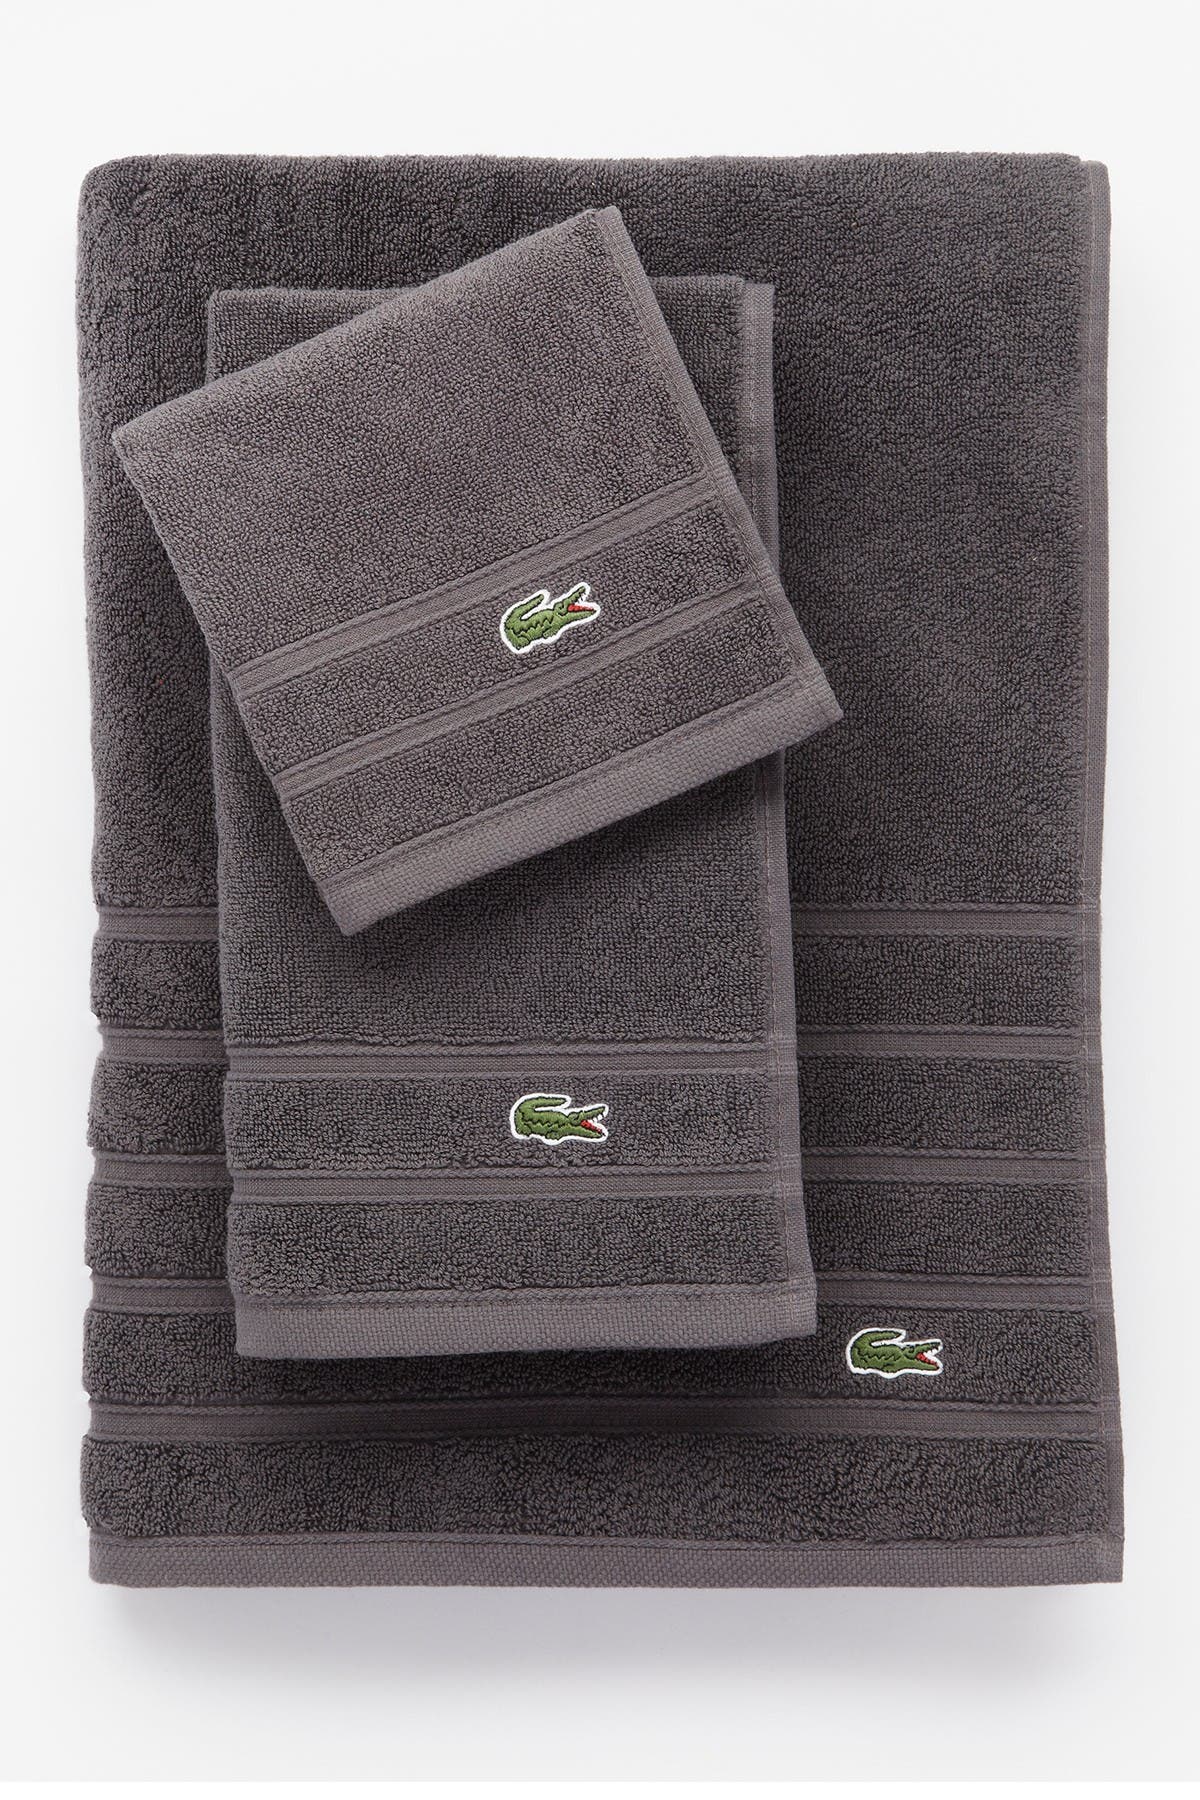 lacoste towels nordstrom rack